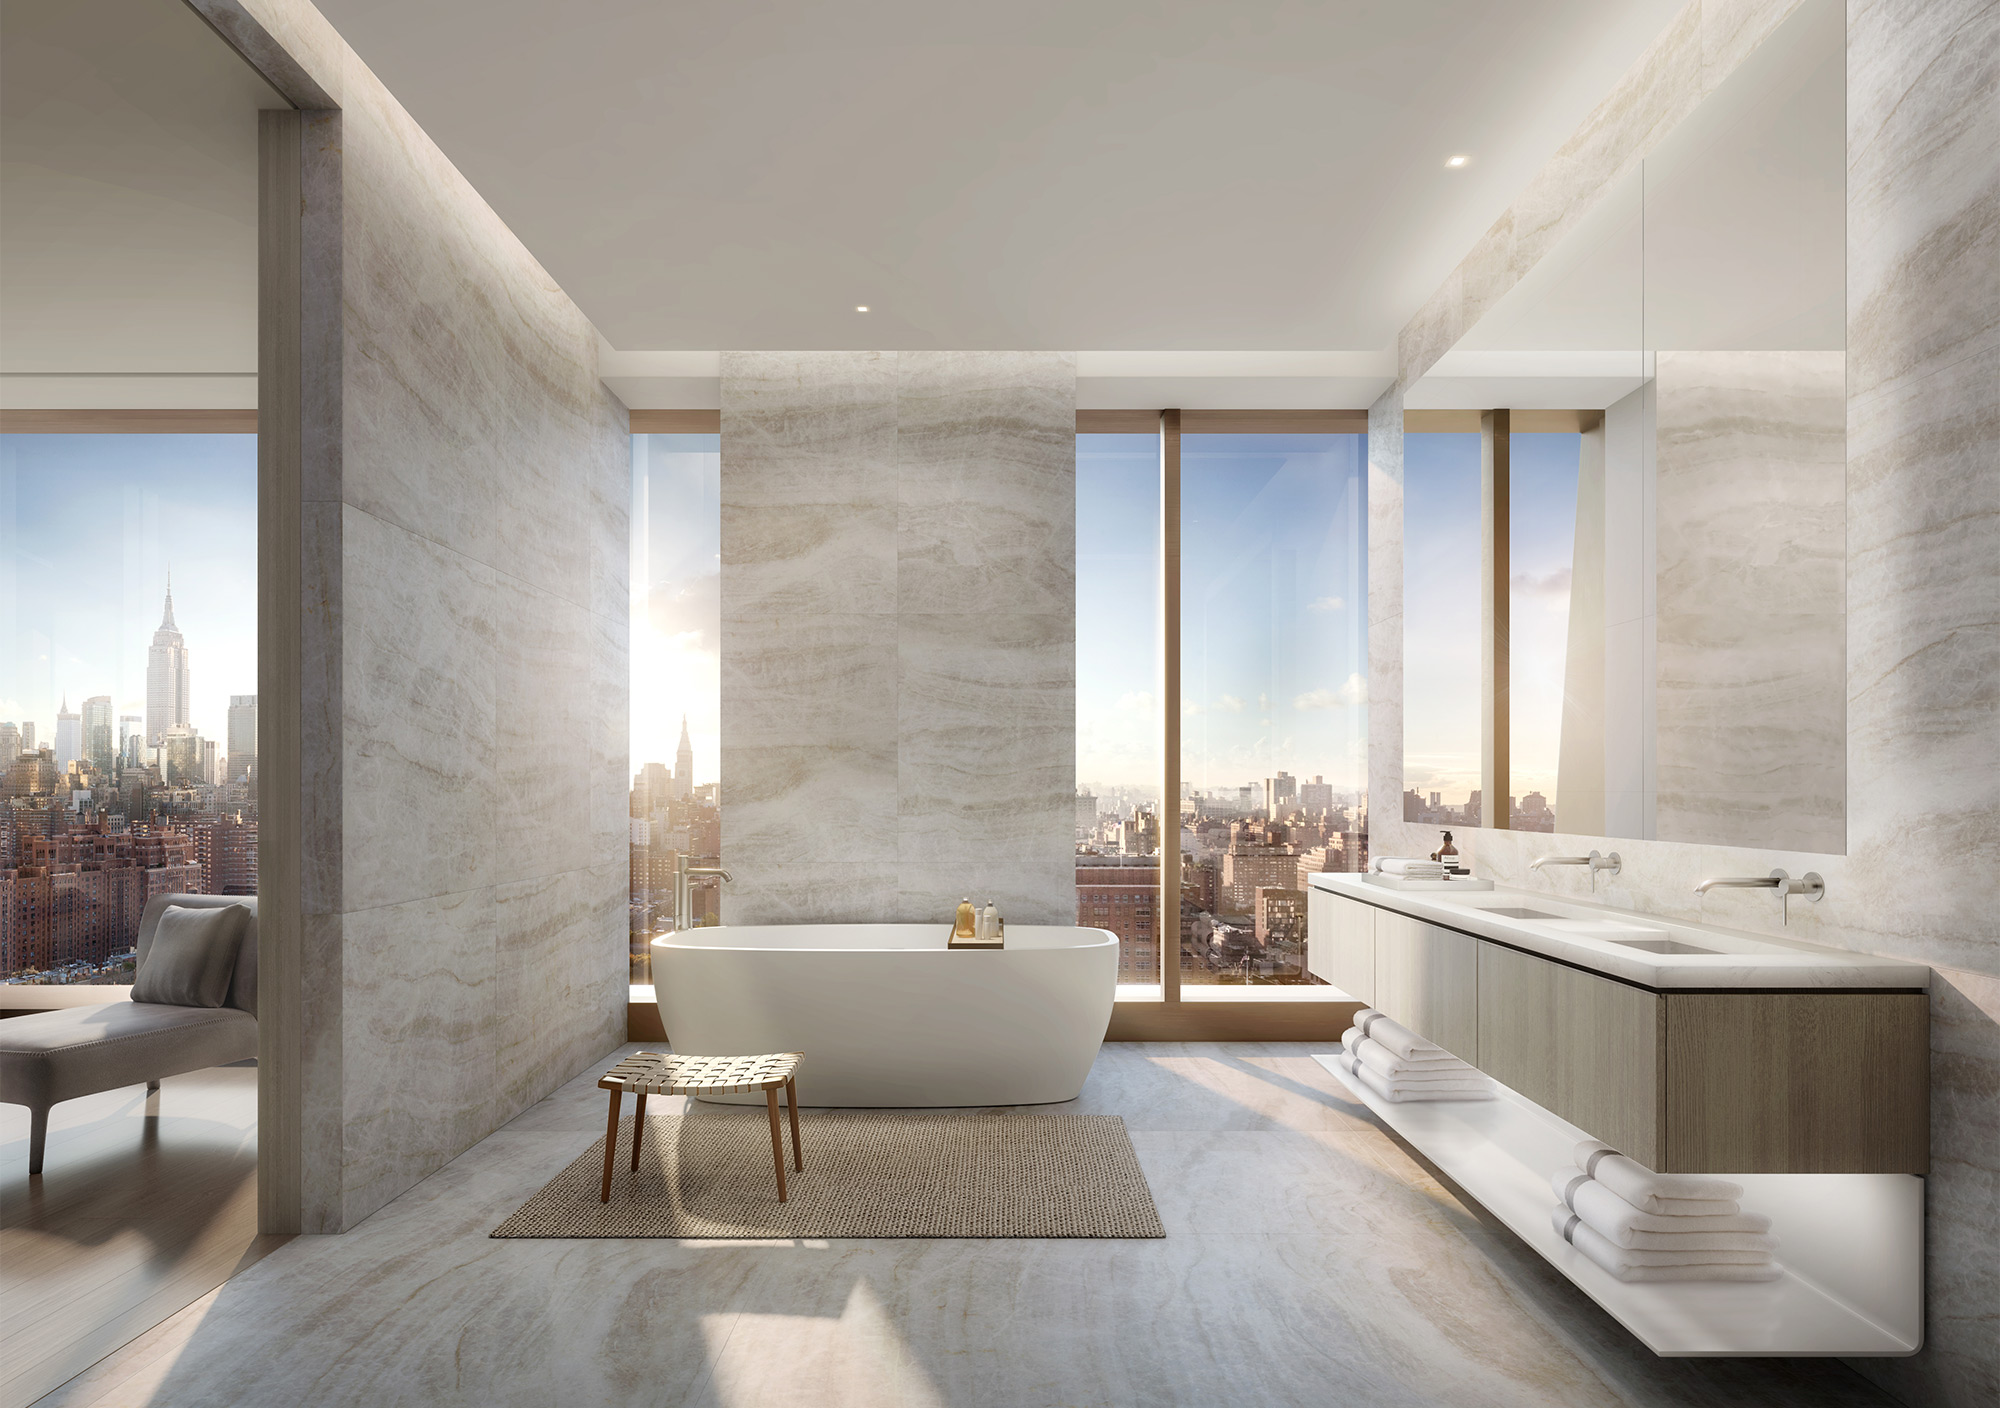 Luxurious bathroom with bathtub and floor to ceiling windows